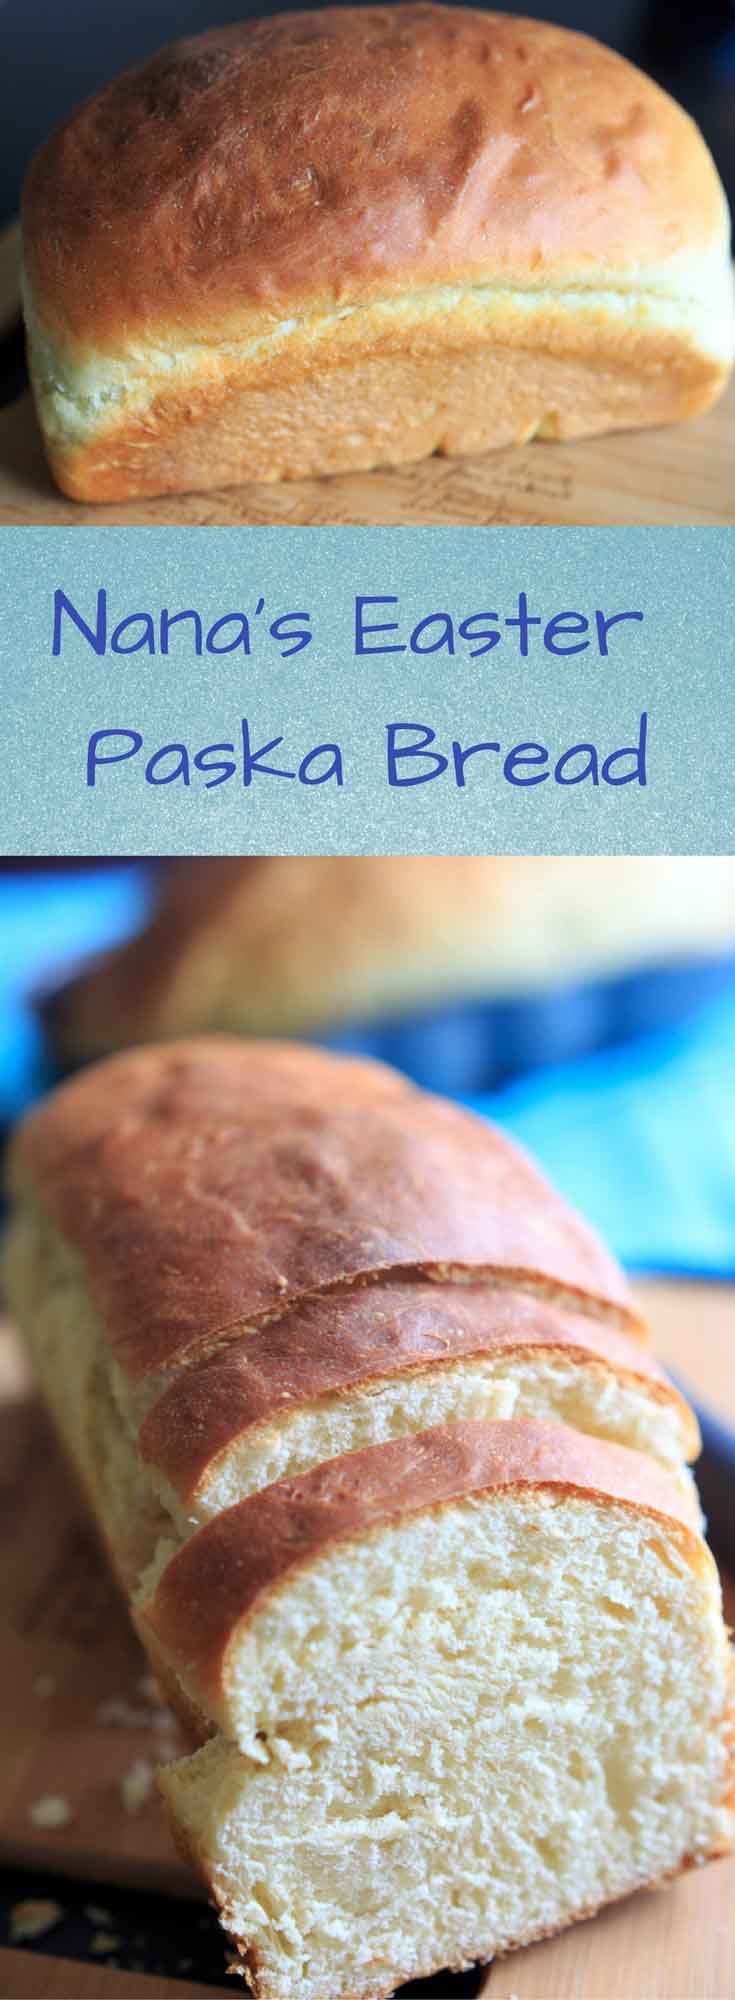 Nana's Easter Paska Bread - egg bread traditionally served at Easter